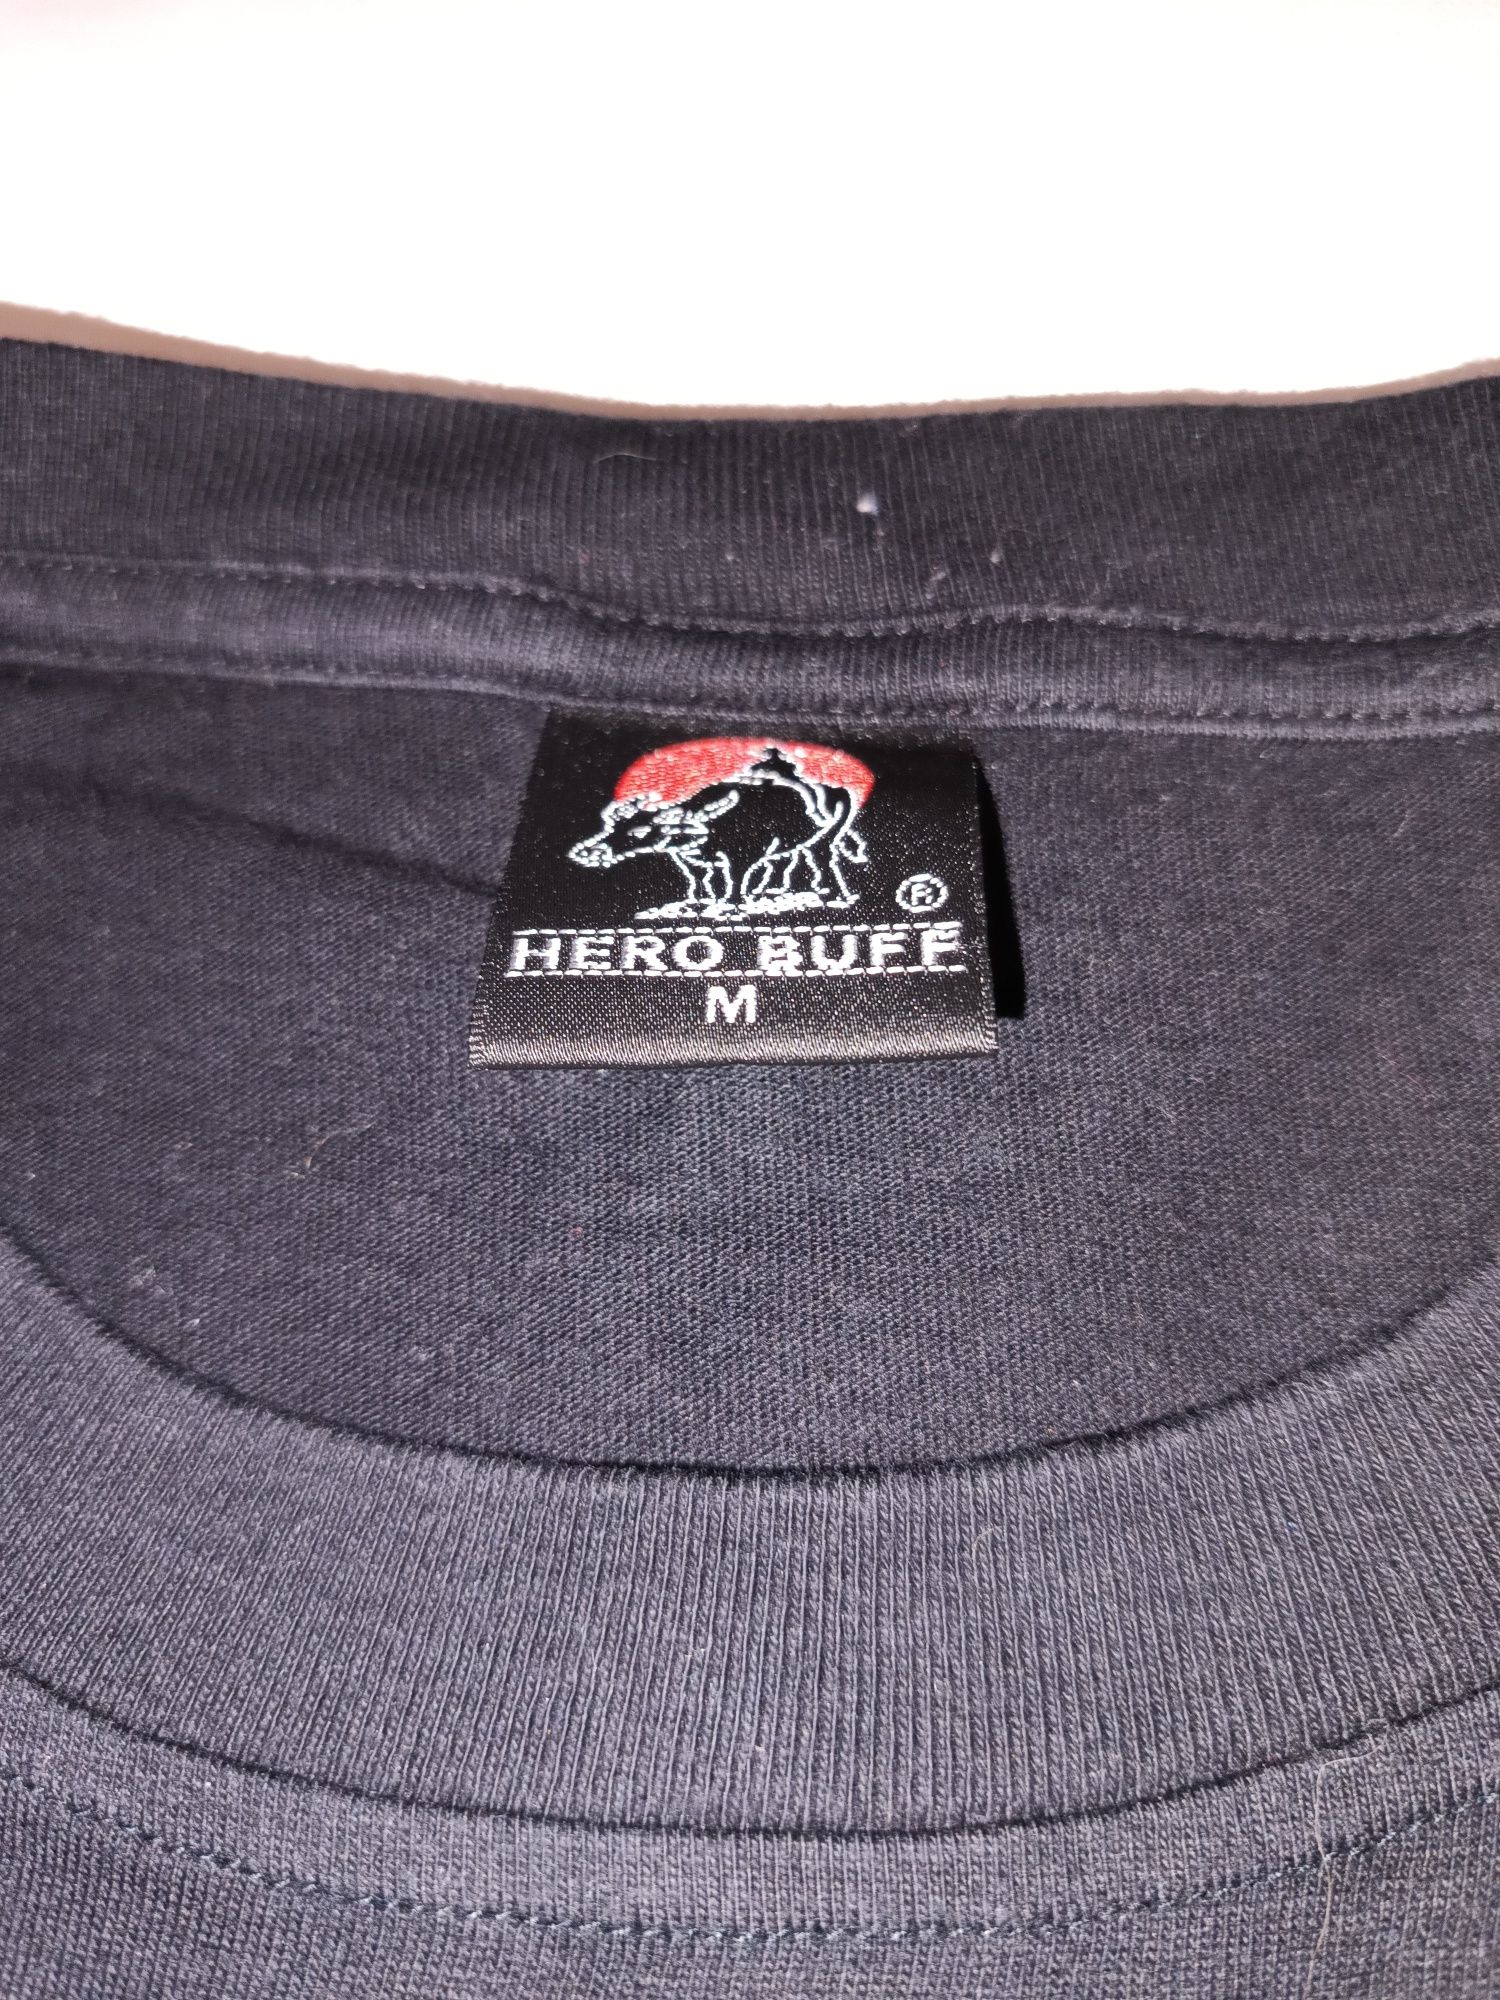 T-shirt Hero BUFF M